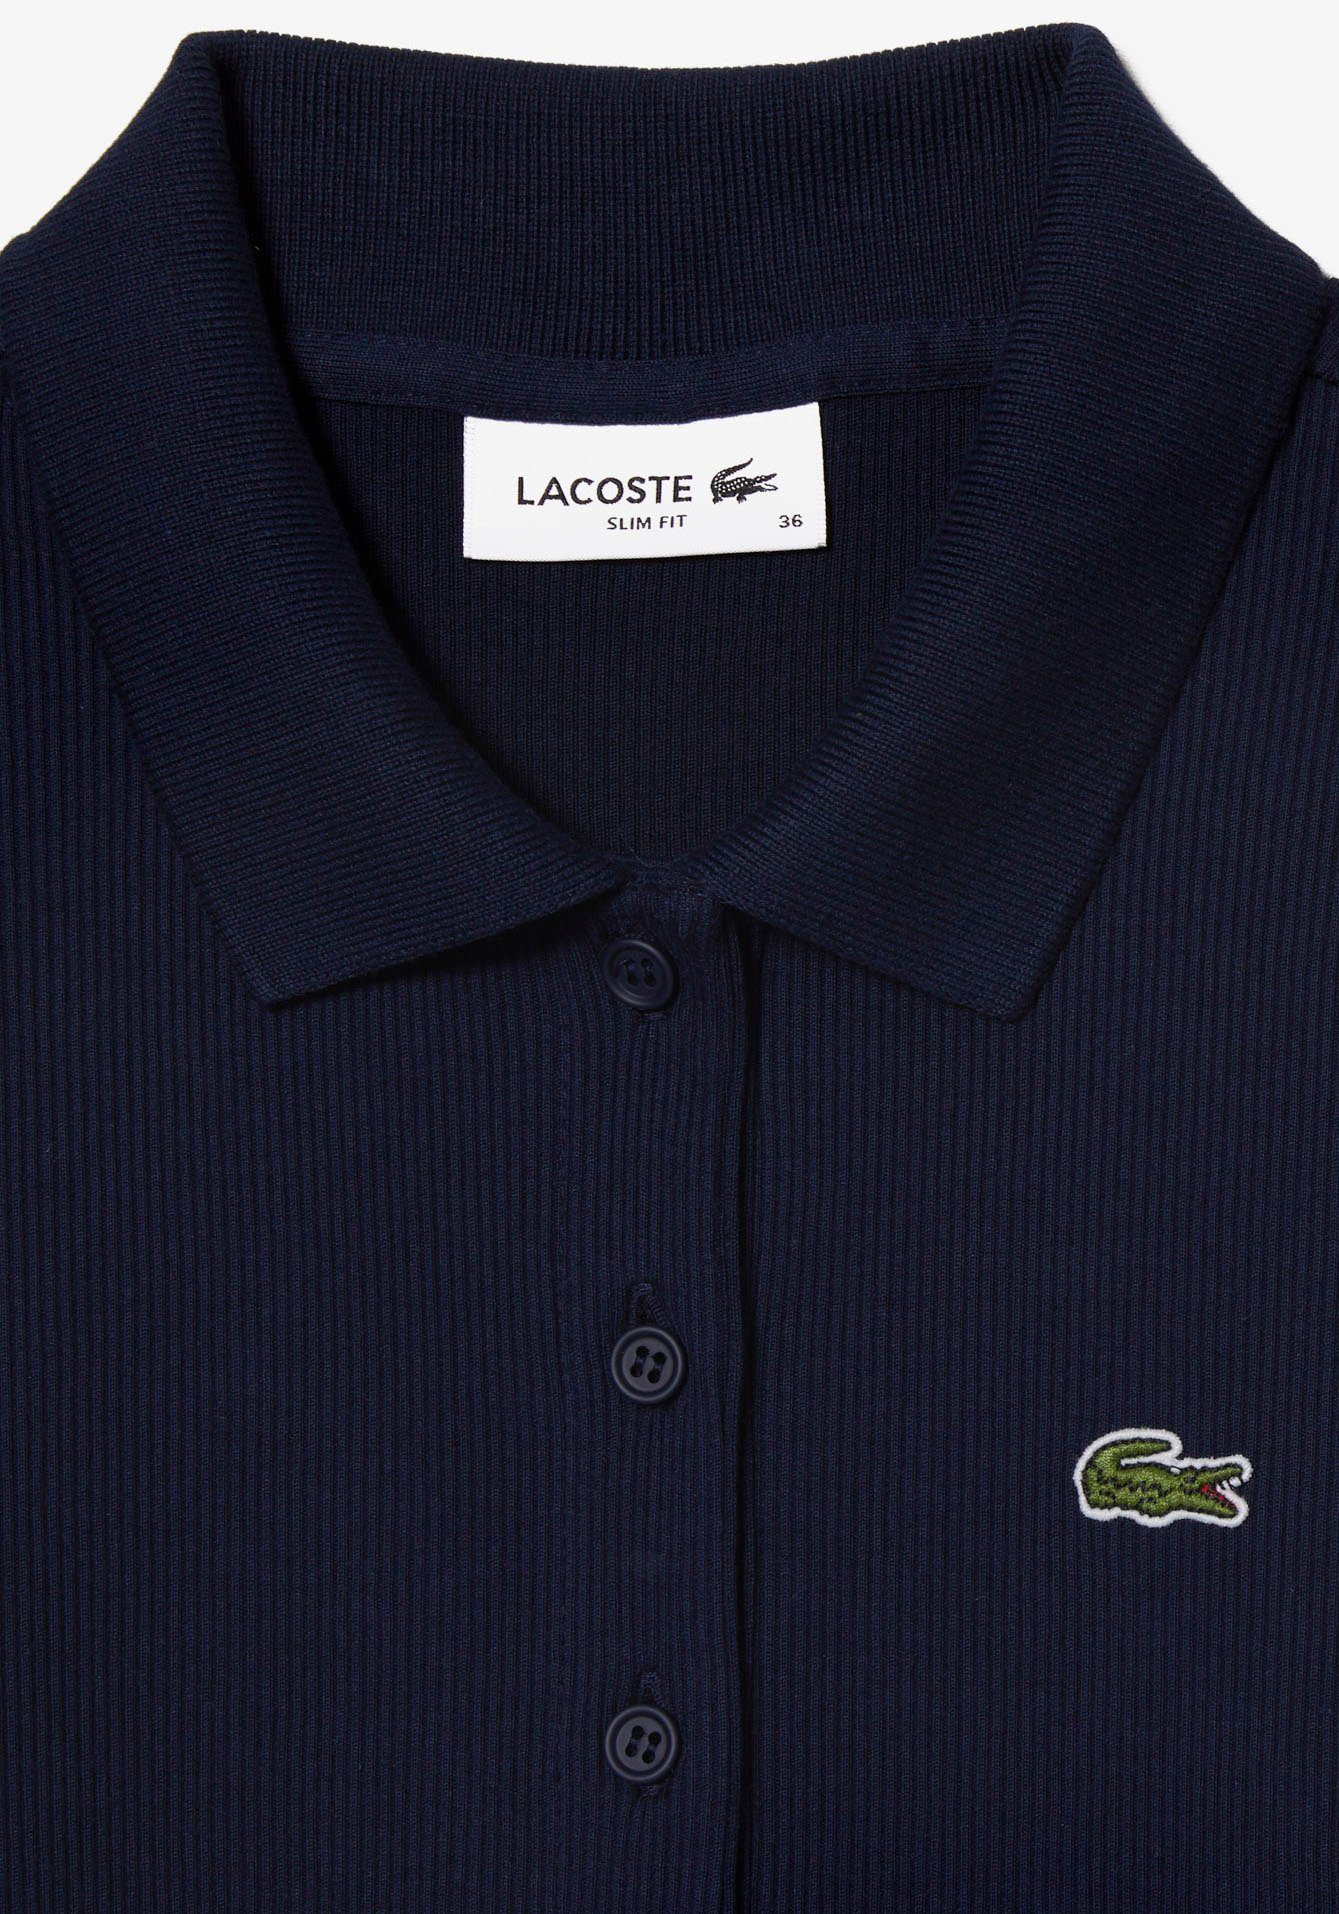 Lacoste Poloshirt navy blue